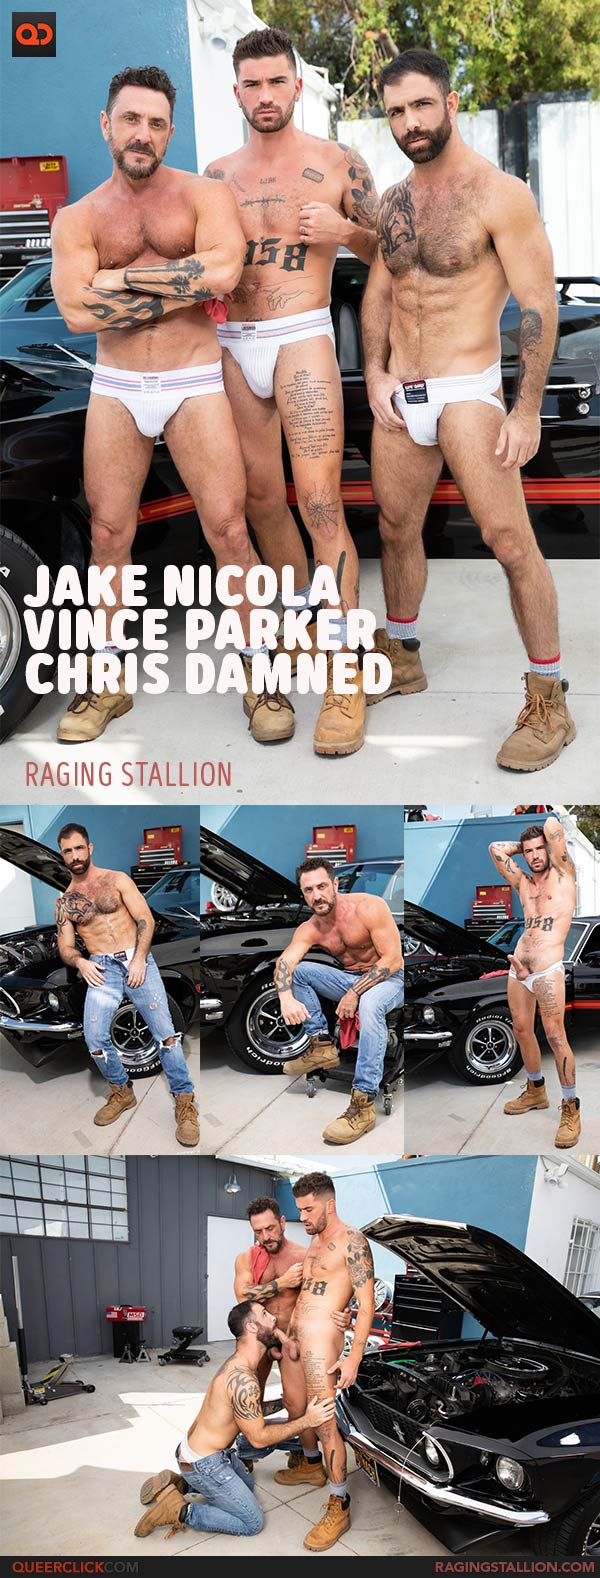 Raging Stallion: Chris Damned, Vince Parker and Jake Nicola